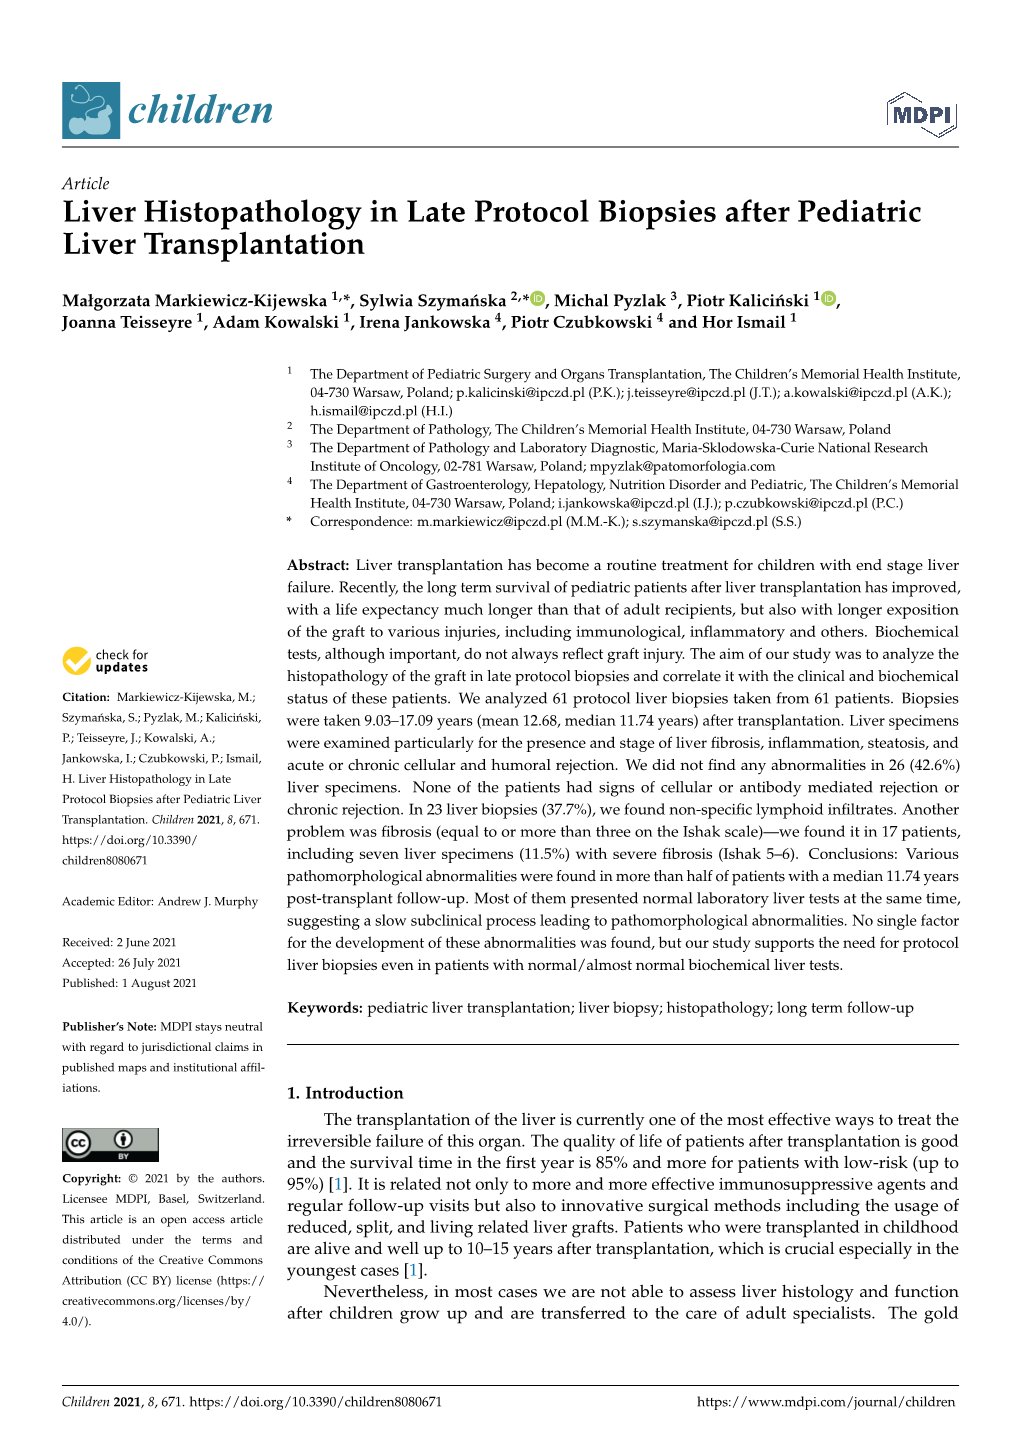 Liver Histopathology in Late Protocol Biopsies After Pediatric Liver Transplantation